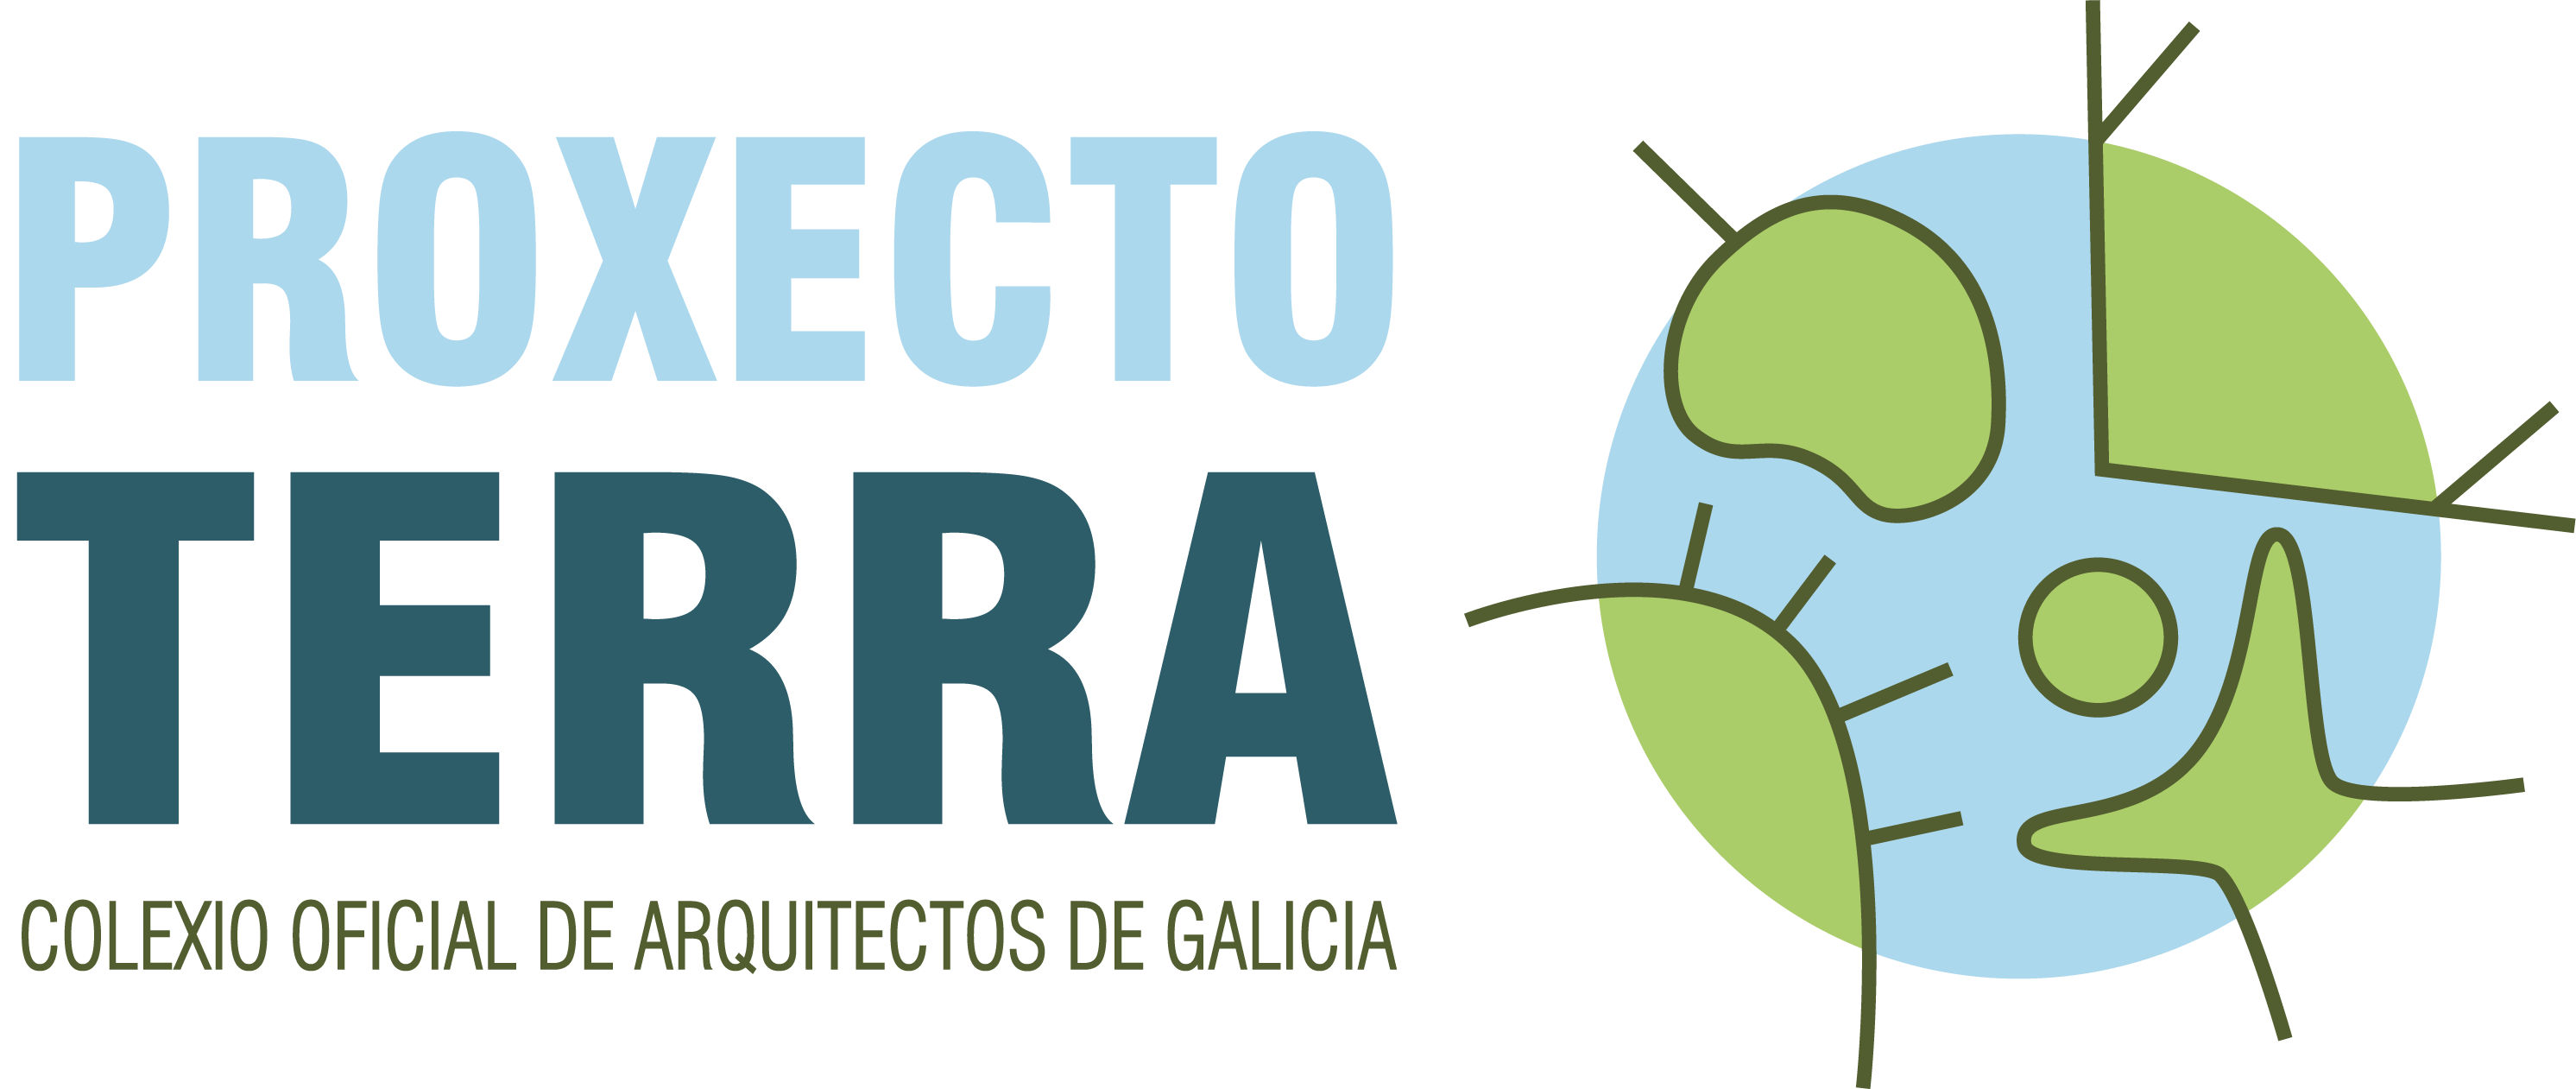 proxectoterra - Colexio Oficial de Arquitectos de Galicia